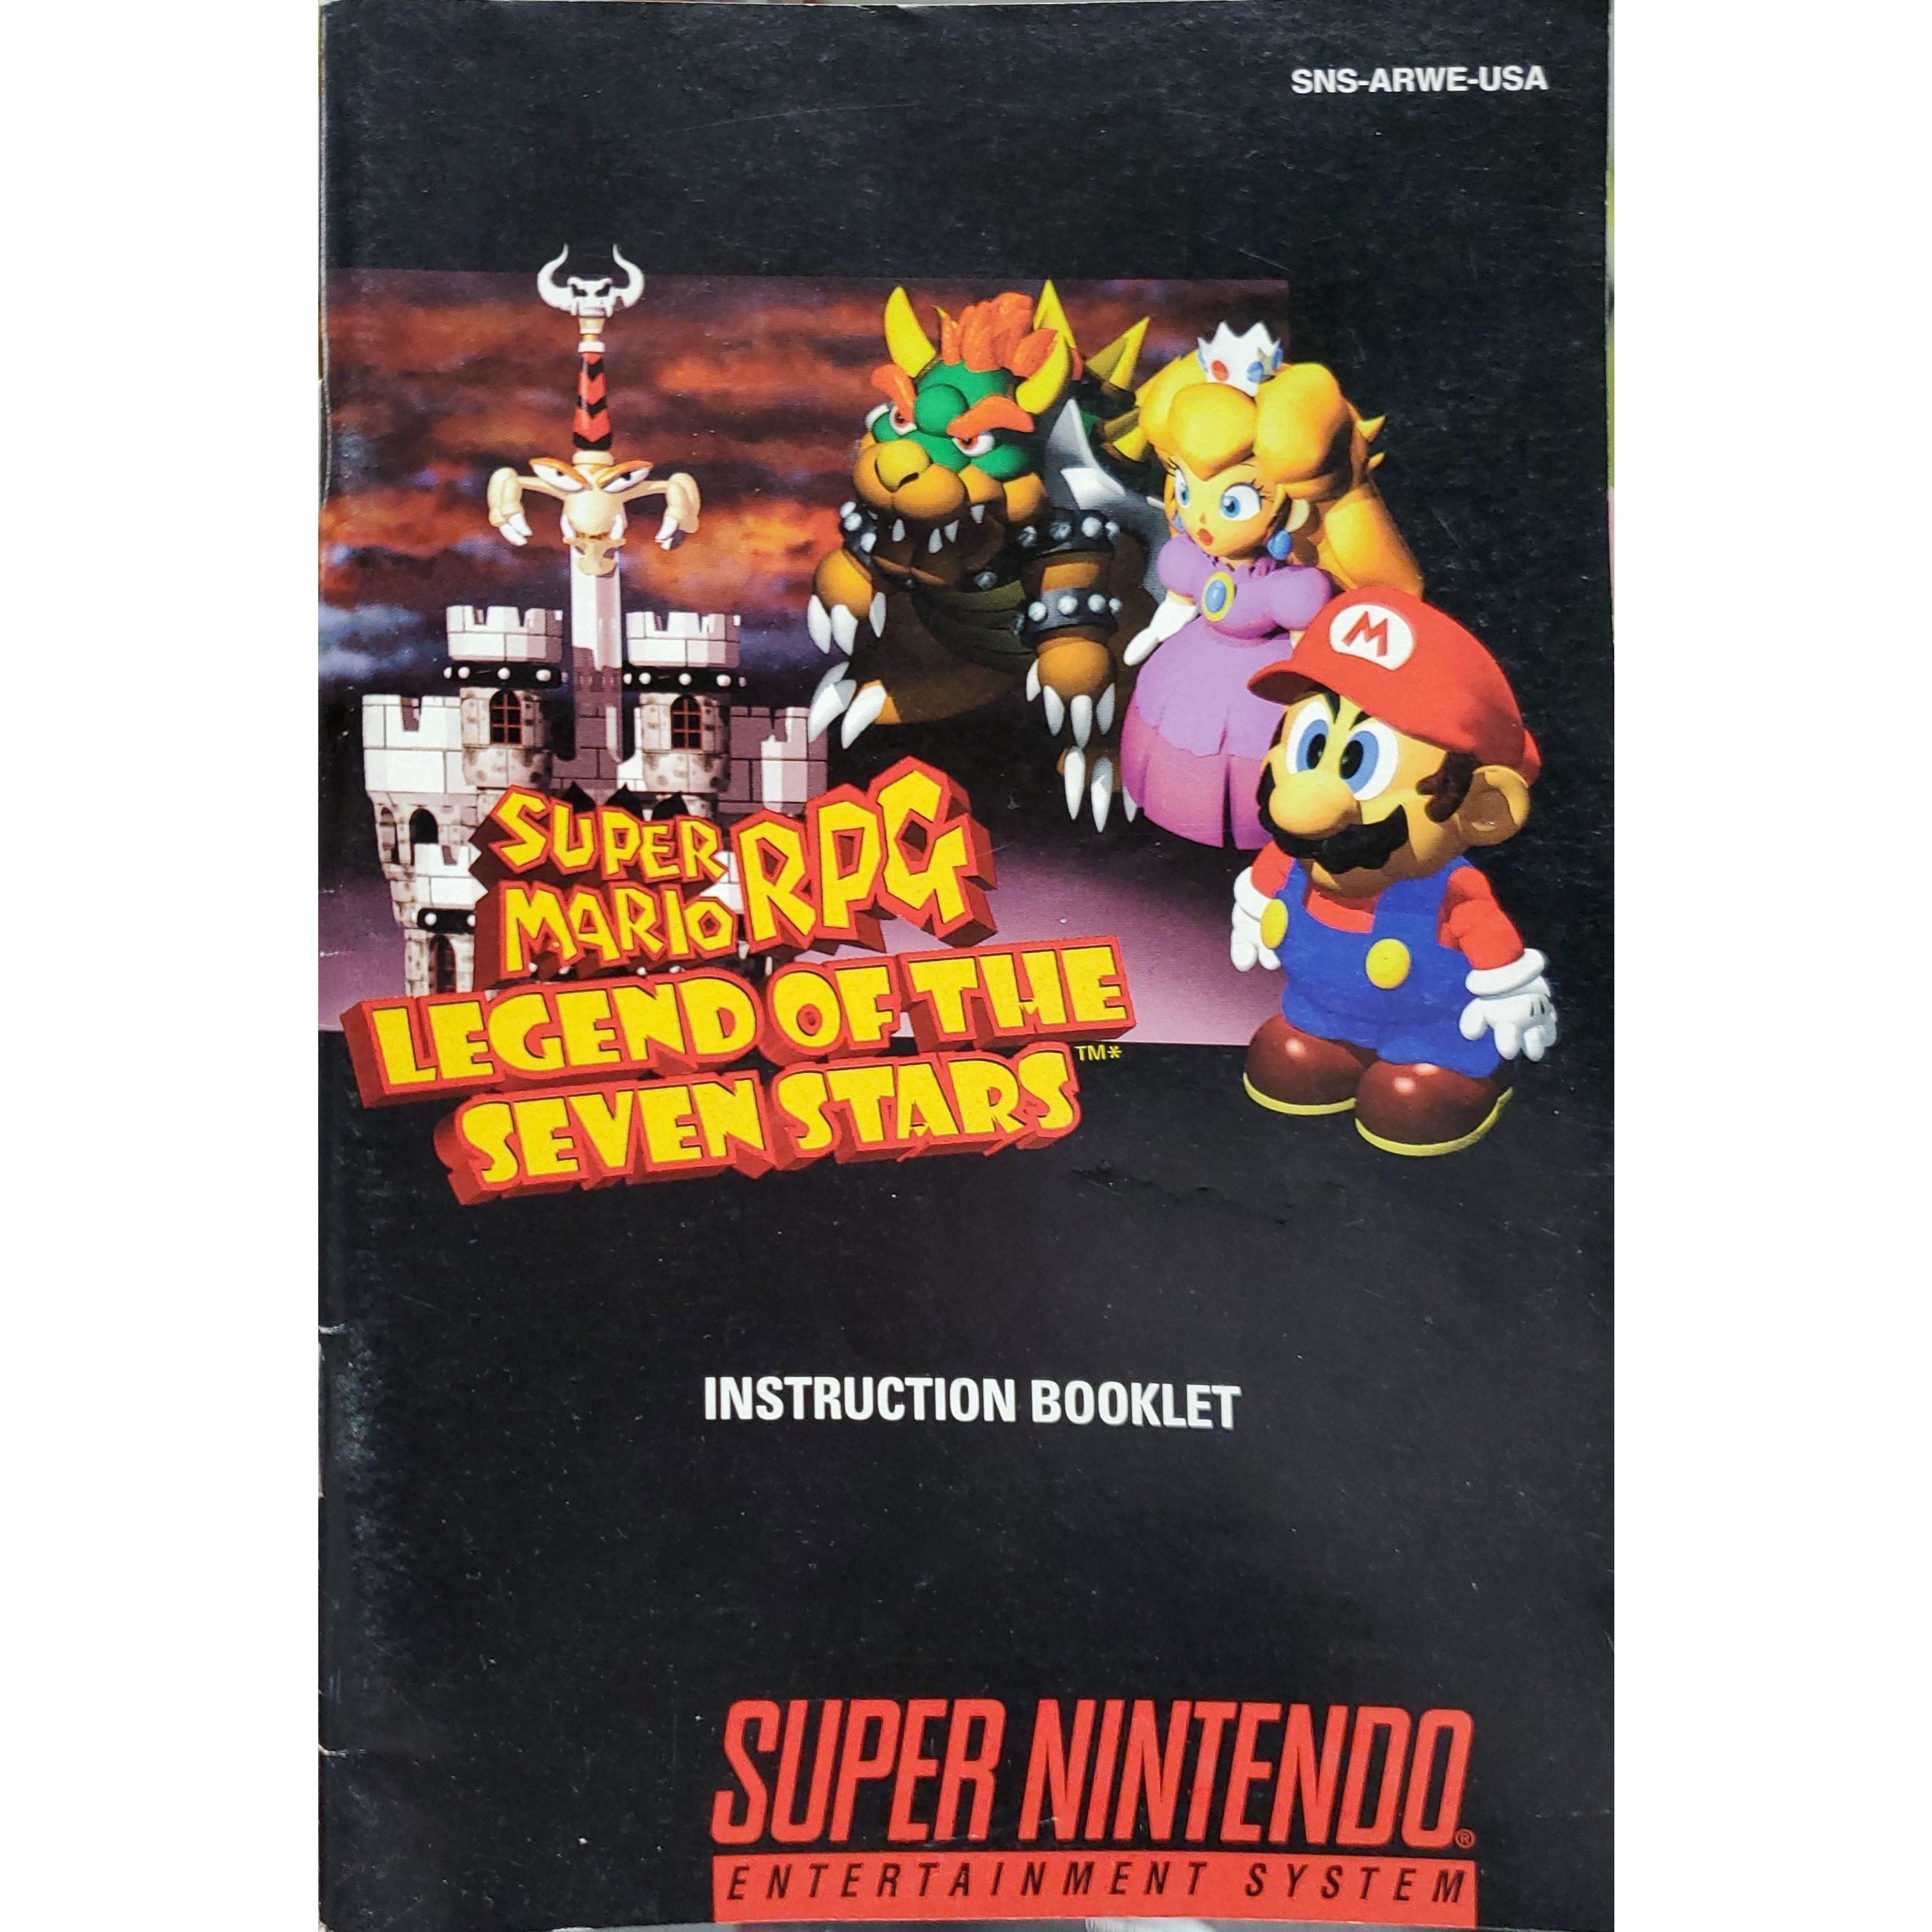 SNES - Super Mario RPG Legend of the Seven Stars (Manual)